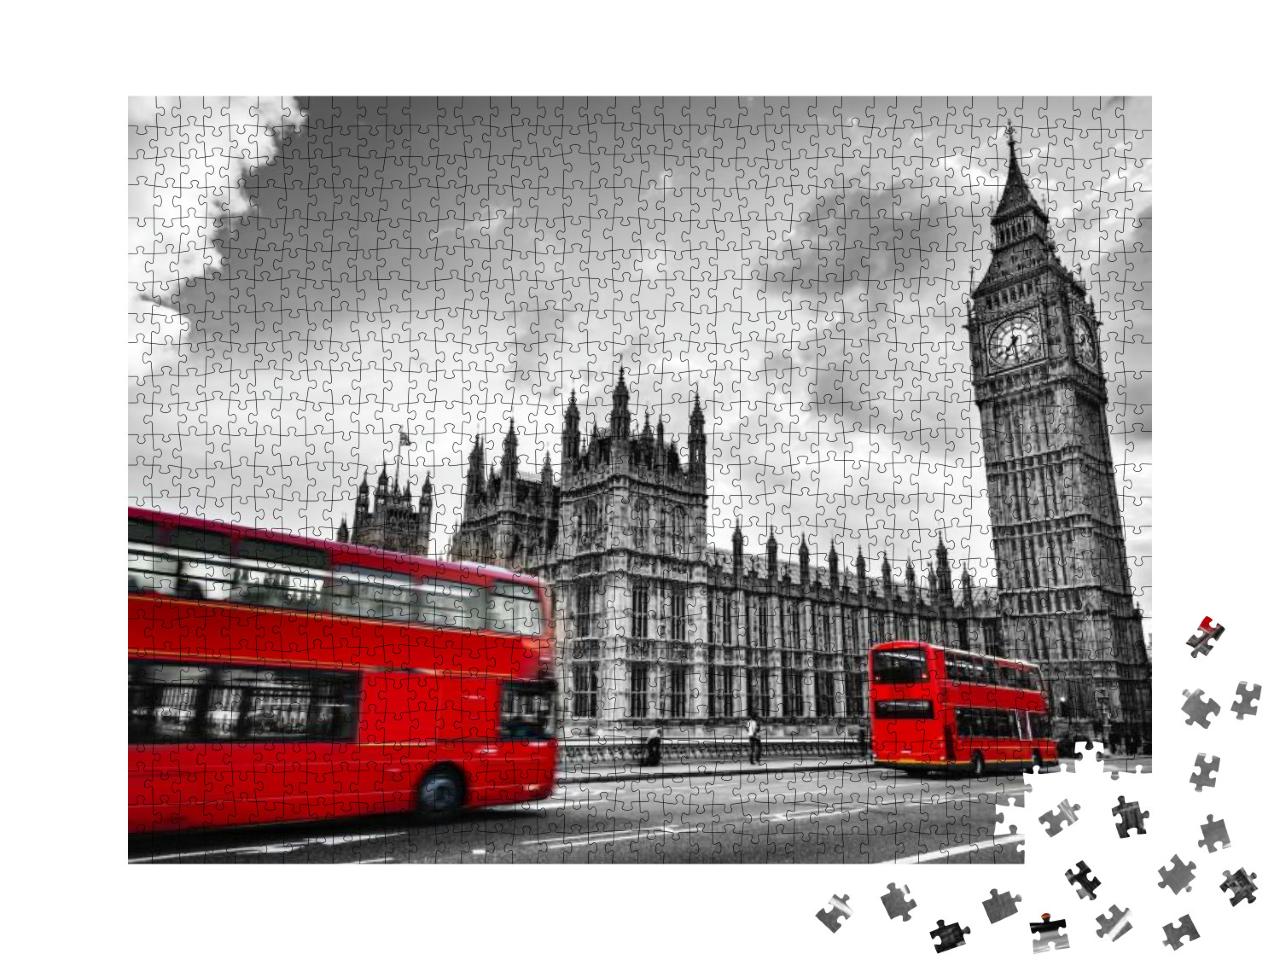 Puzzle 1000 Teile „Westminster Palace, Big Ben, Routmaster-Bus - Impressionen aus London, England“